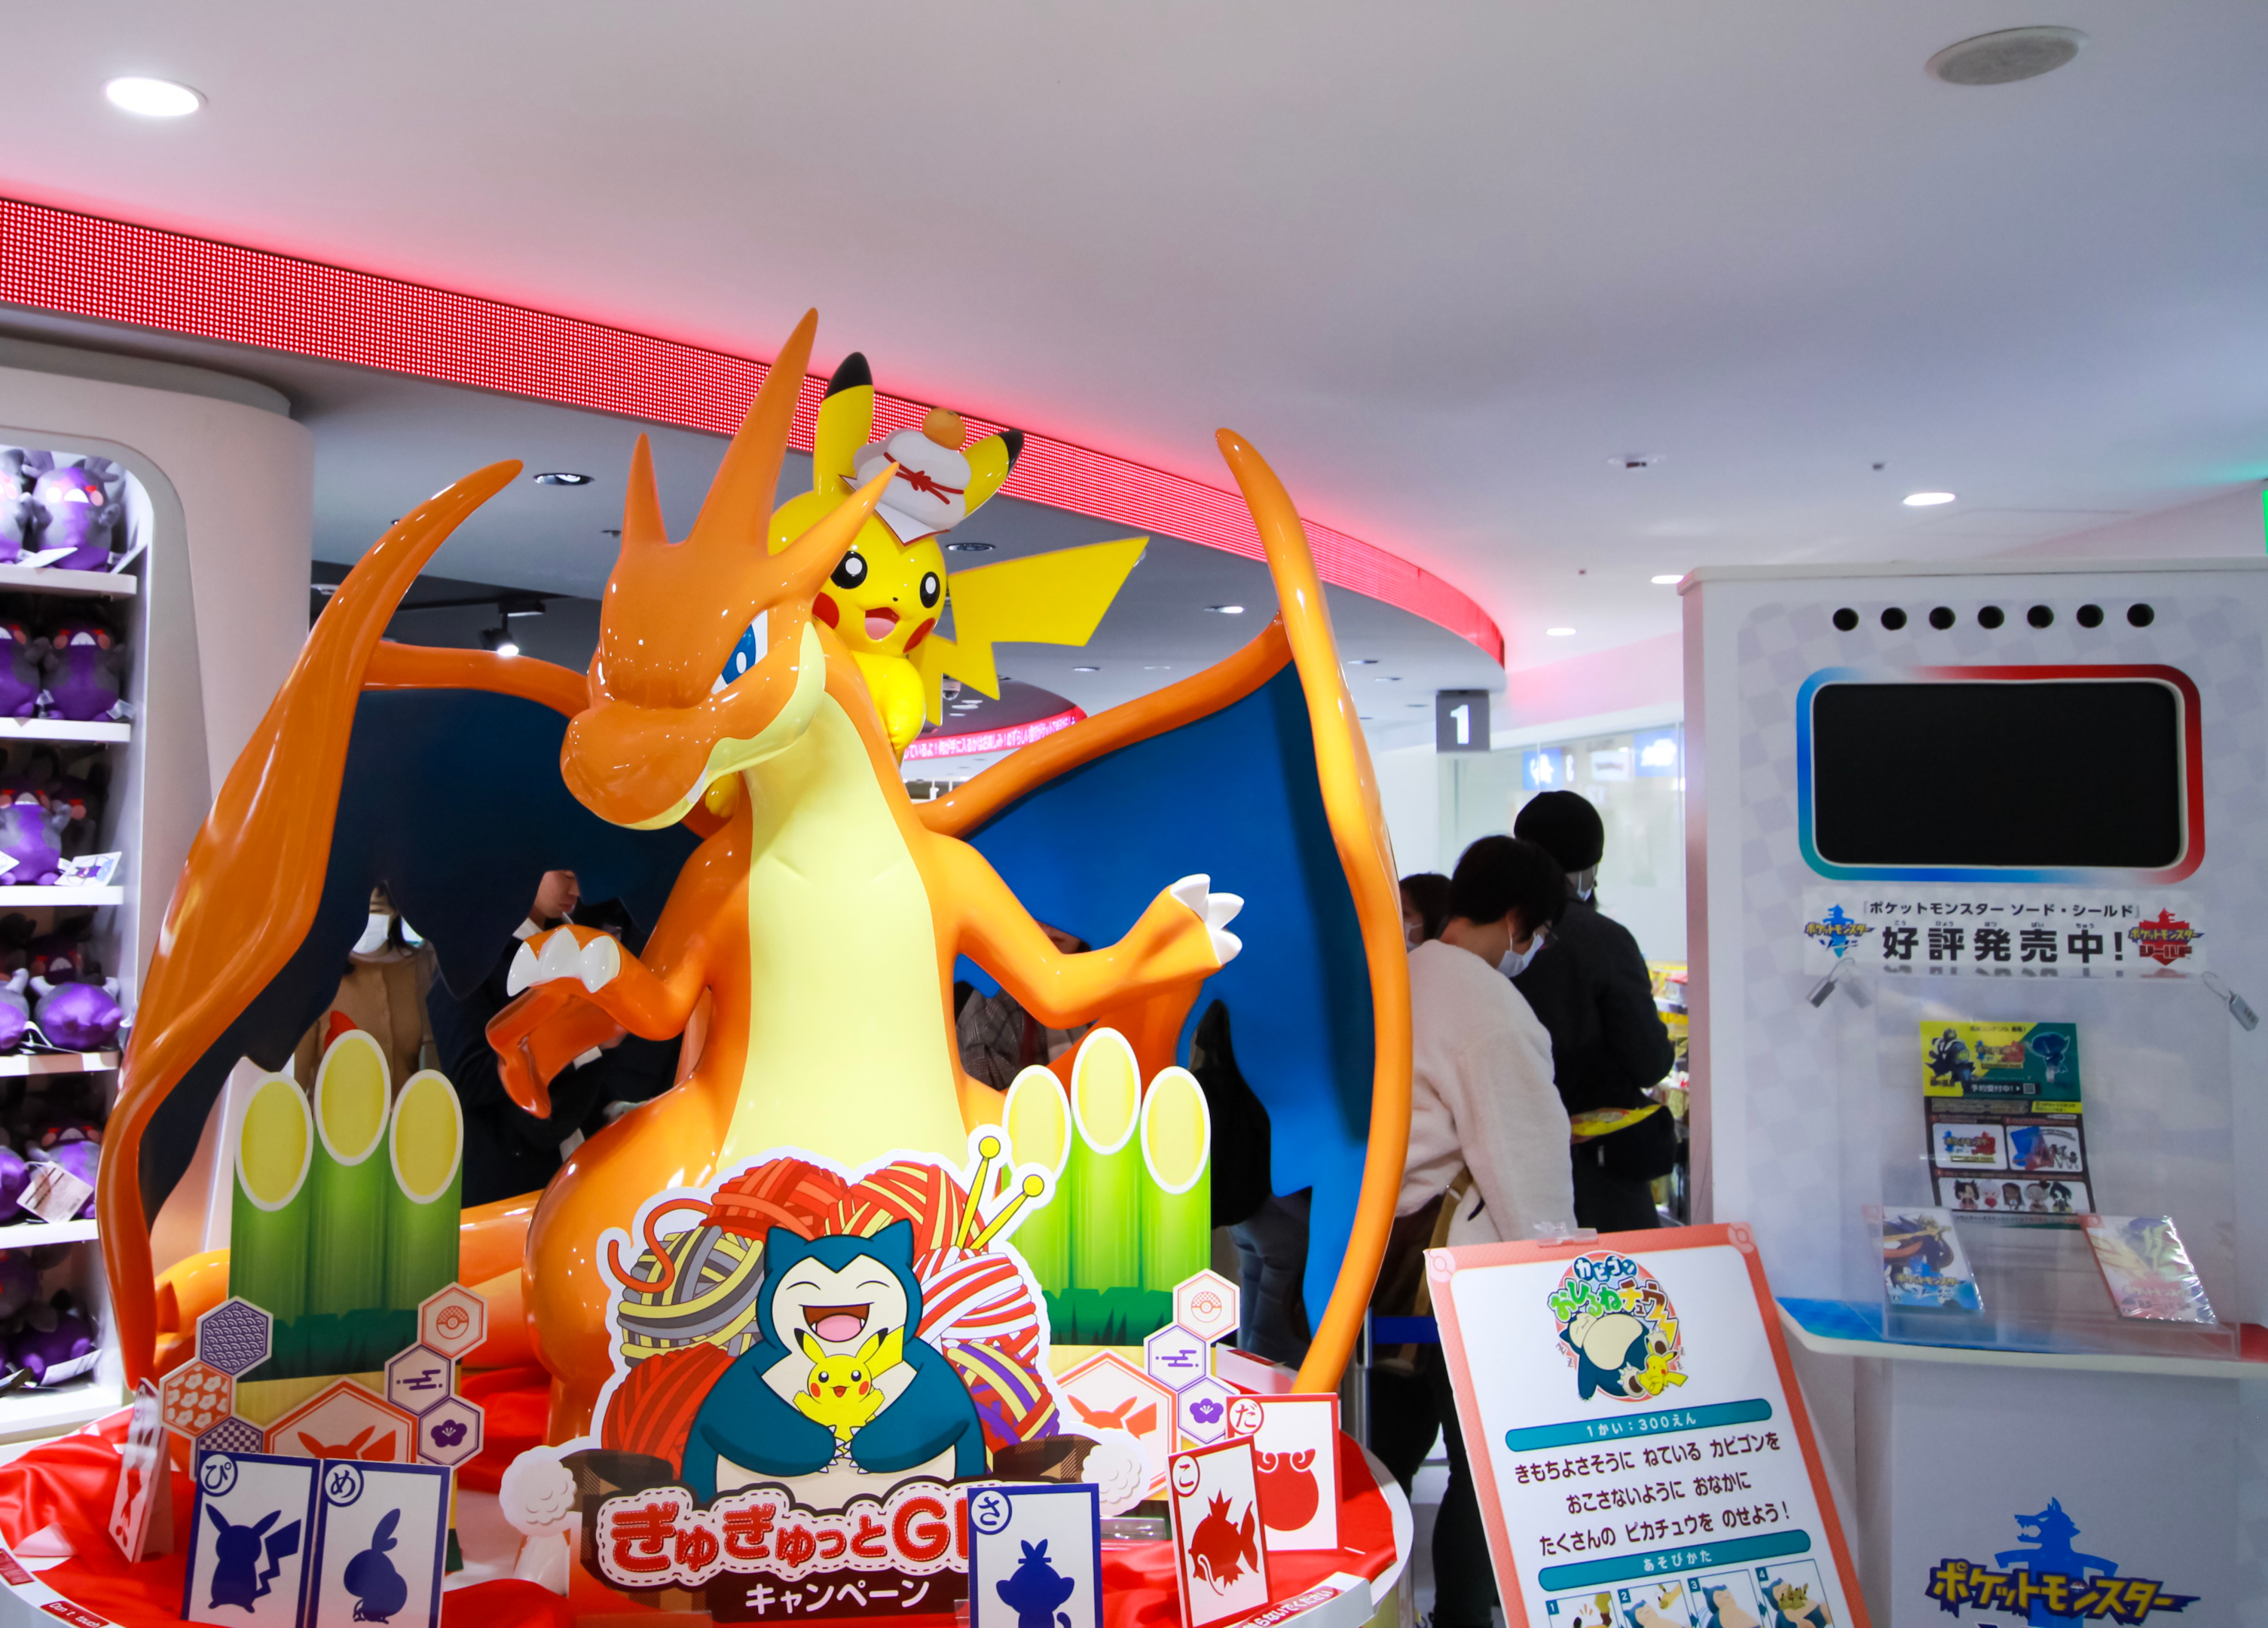 Pokémon Center Mega Tokyo featuring Pikachu and Mega Charizard Y